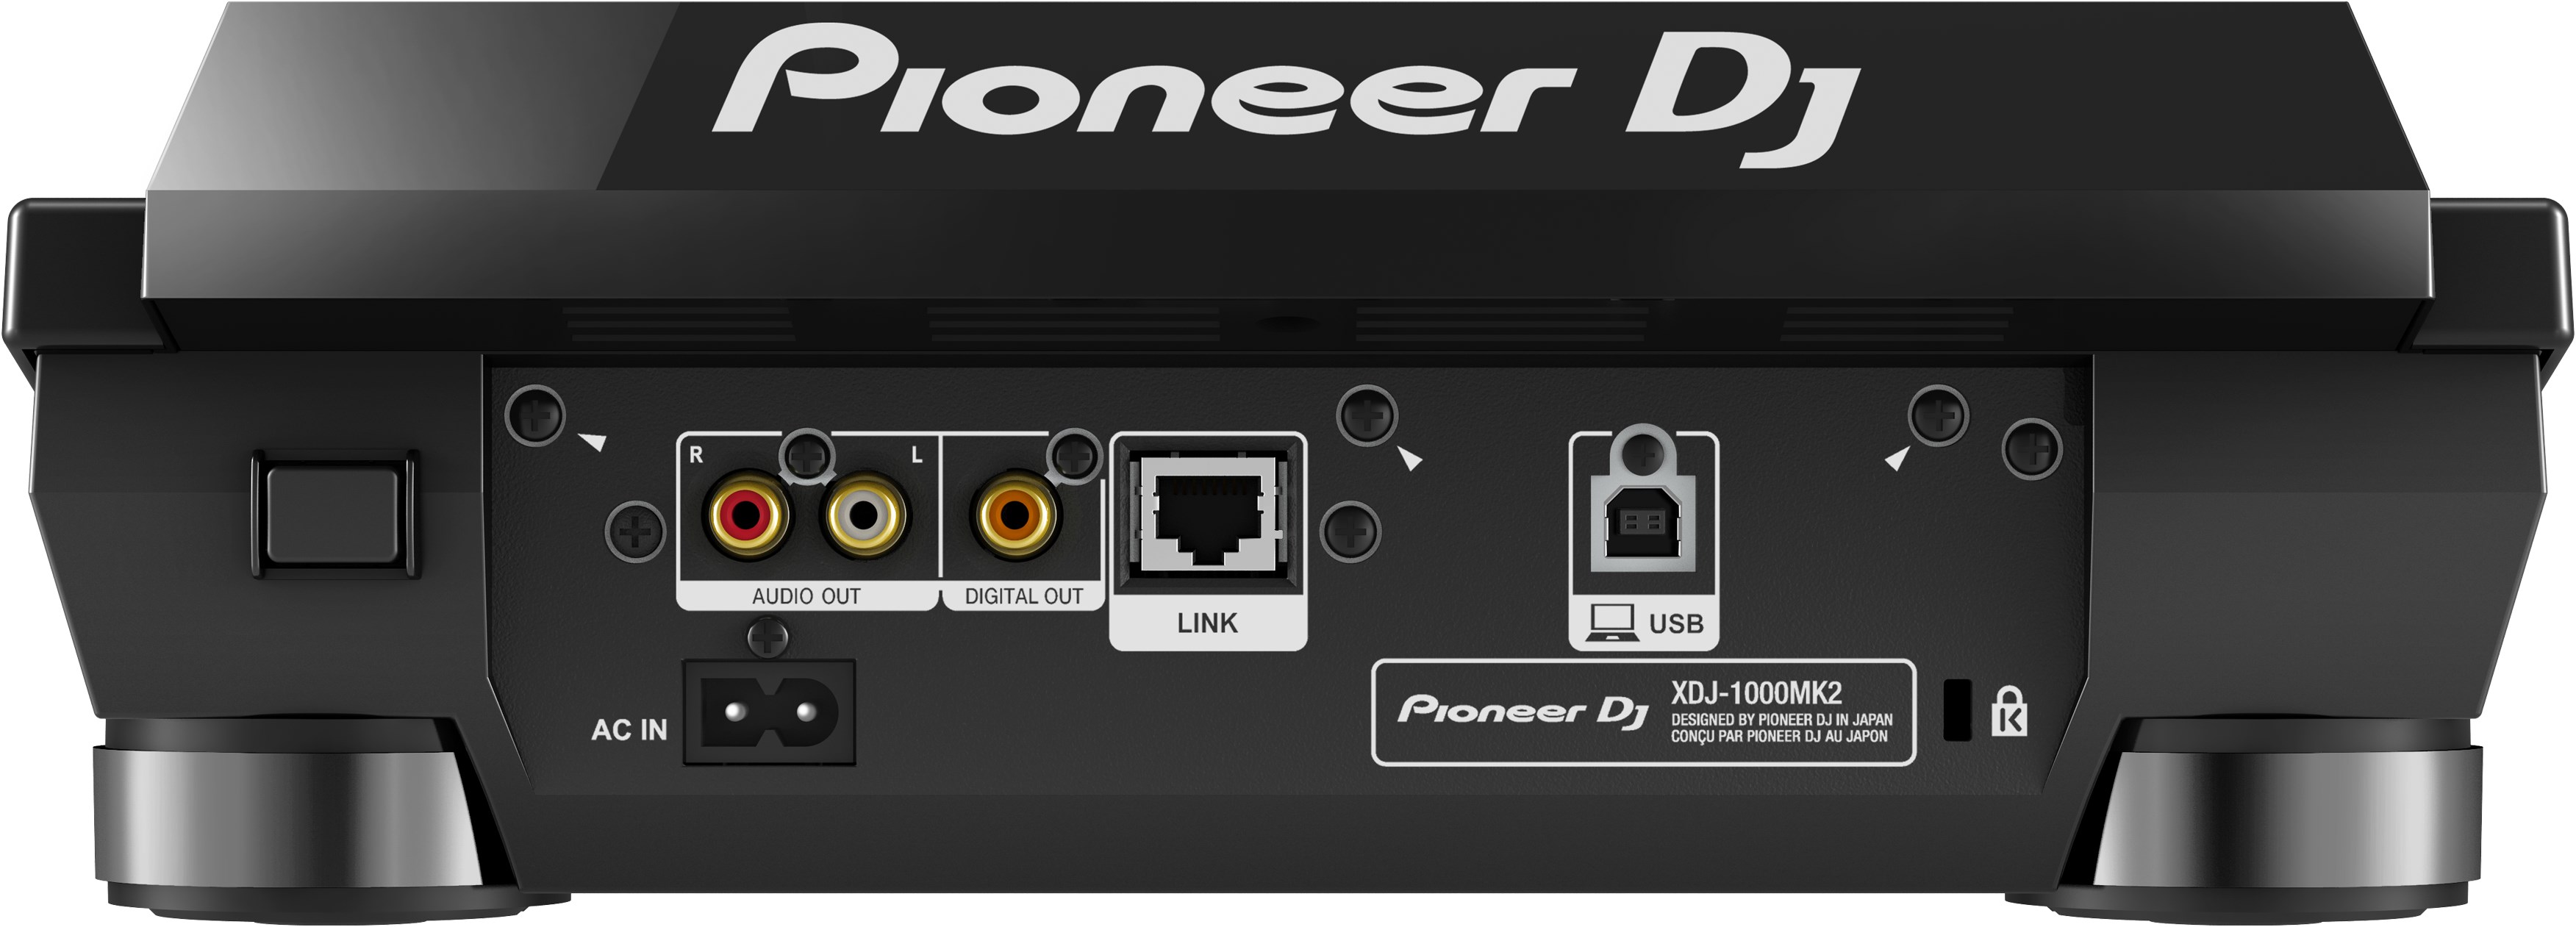 Pioneer Dj Xdj-1000mk2 - MP3 & CD Turntable - Variation 2